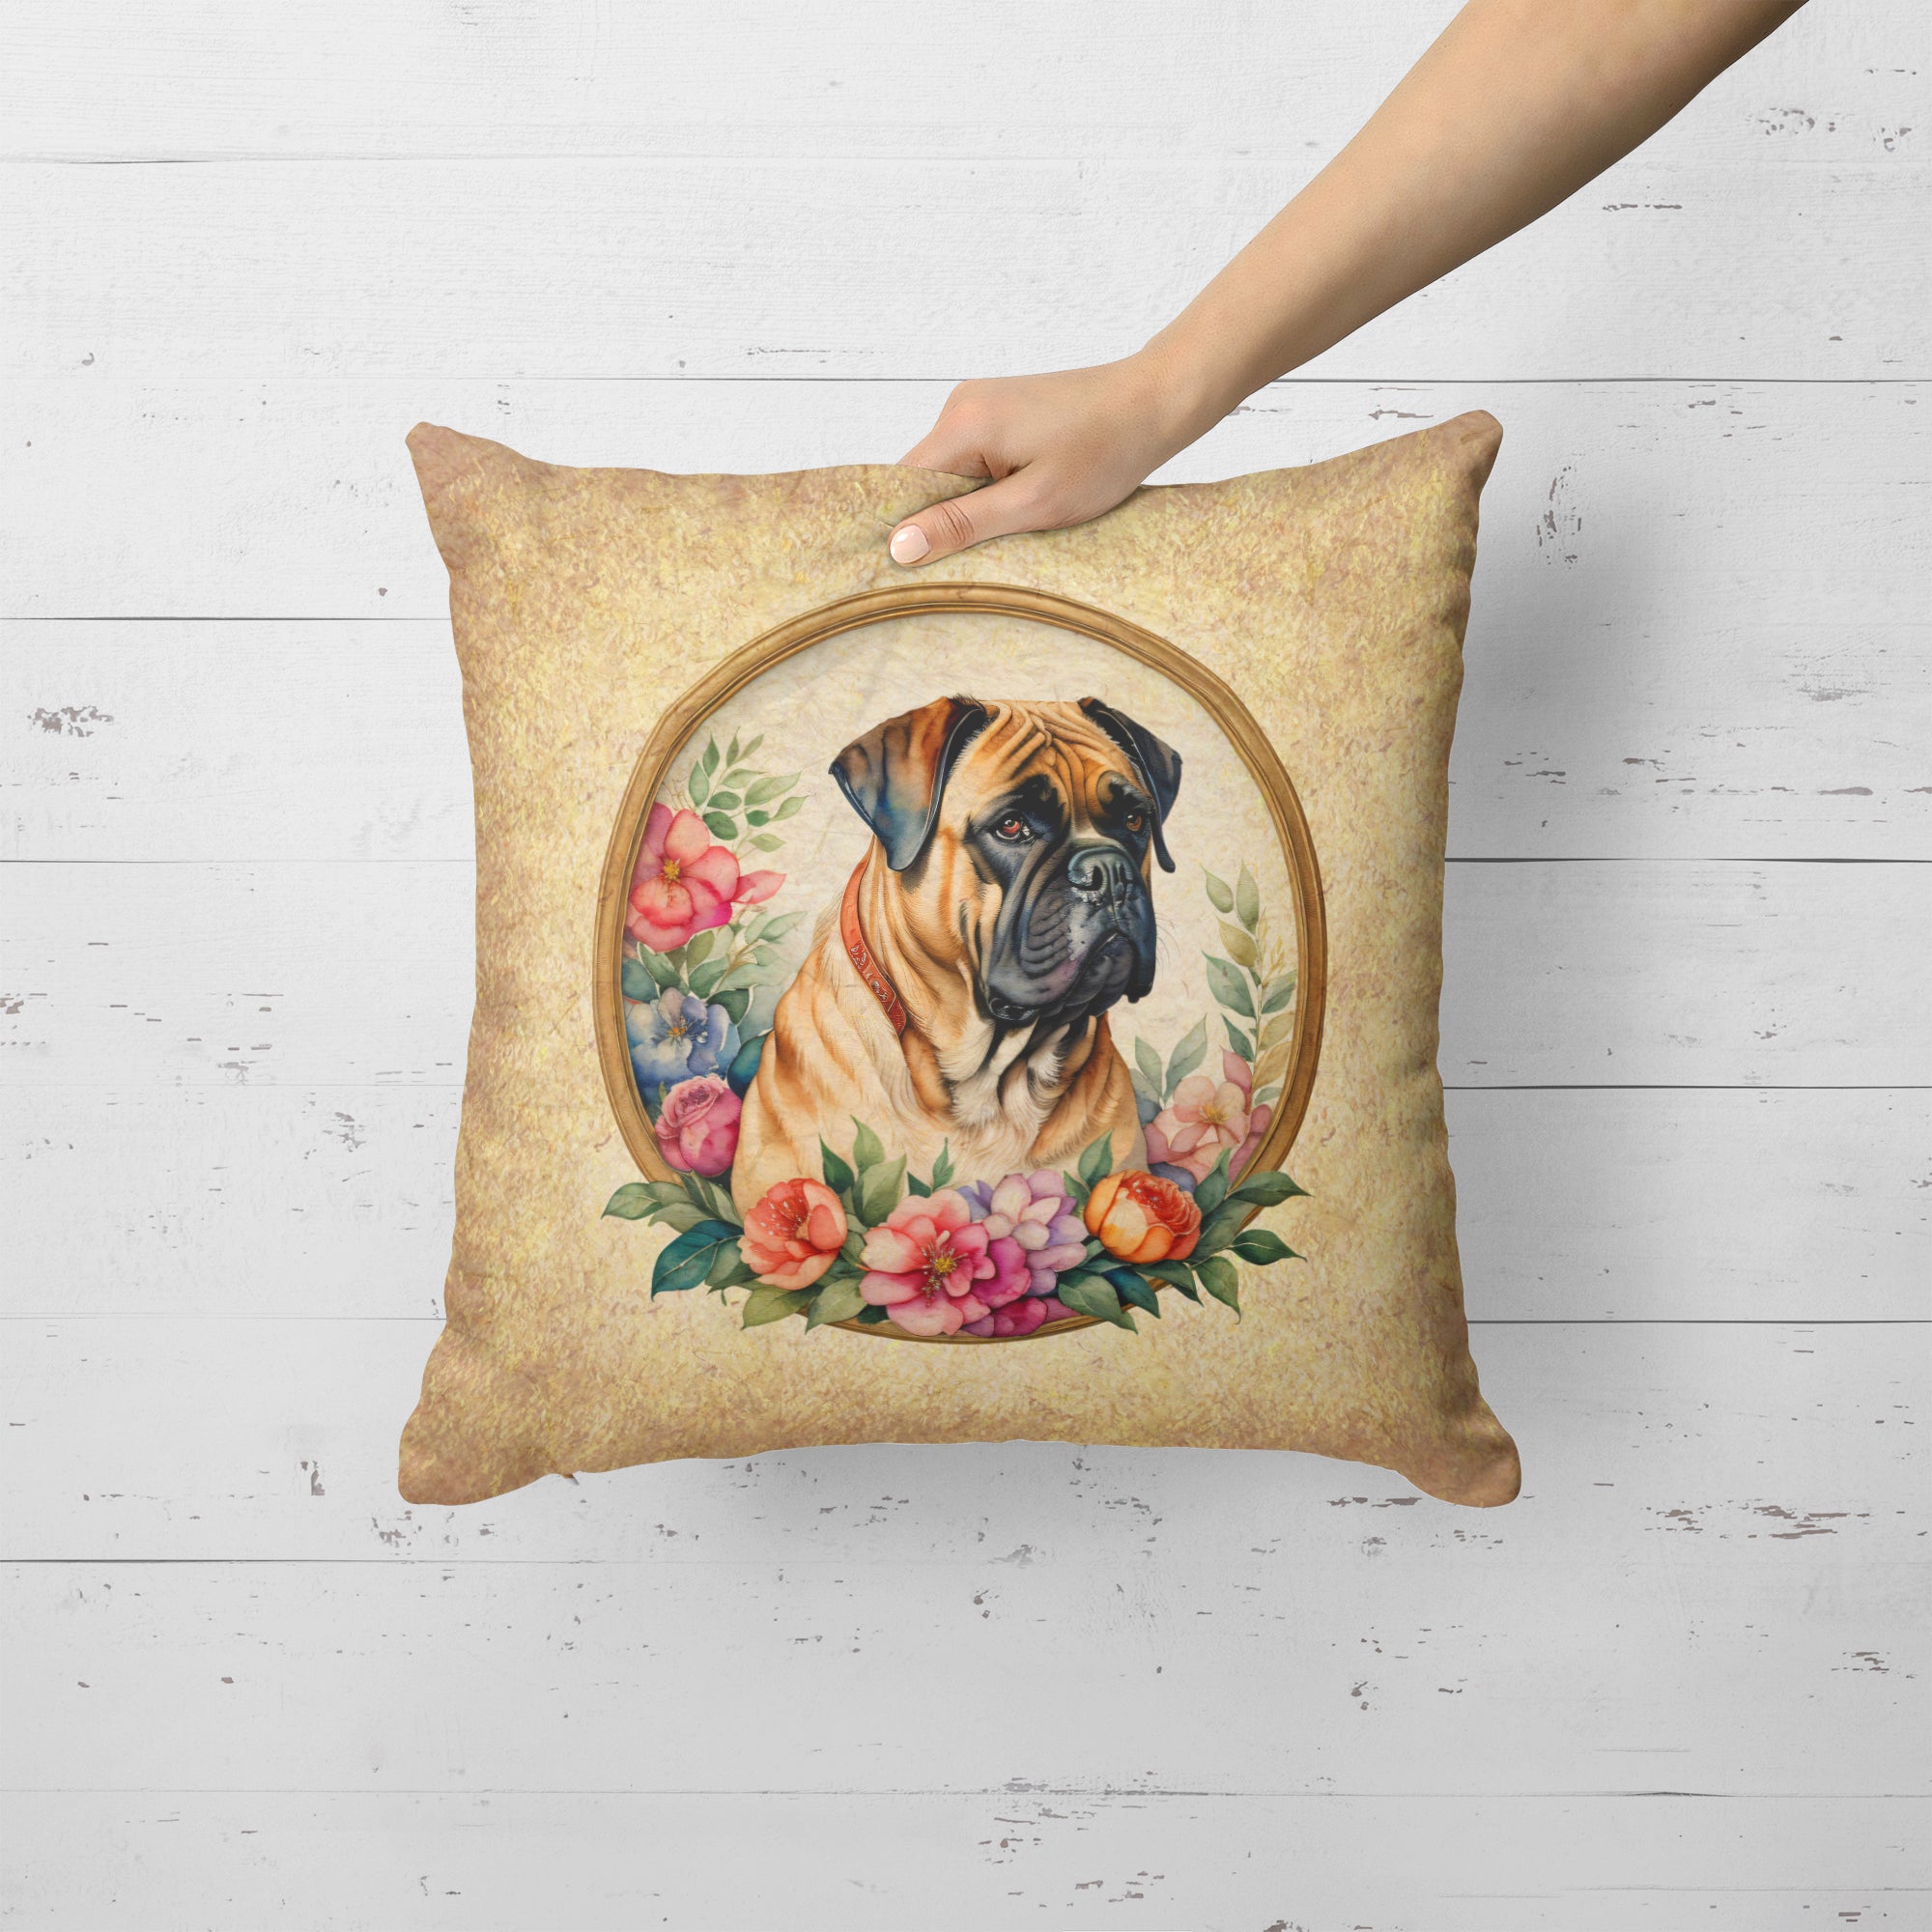 Buy this Bullmastiff and Flowers Fabric Decorative Pillow